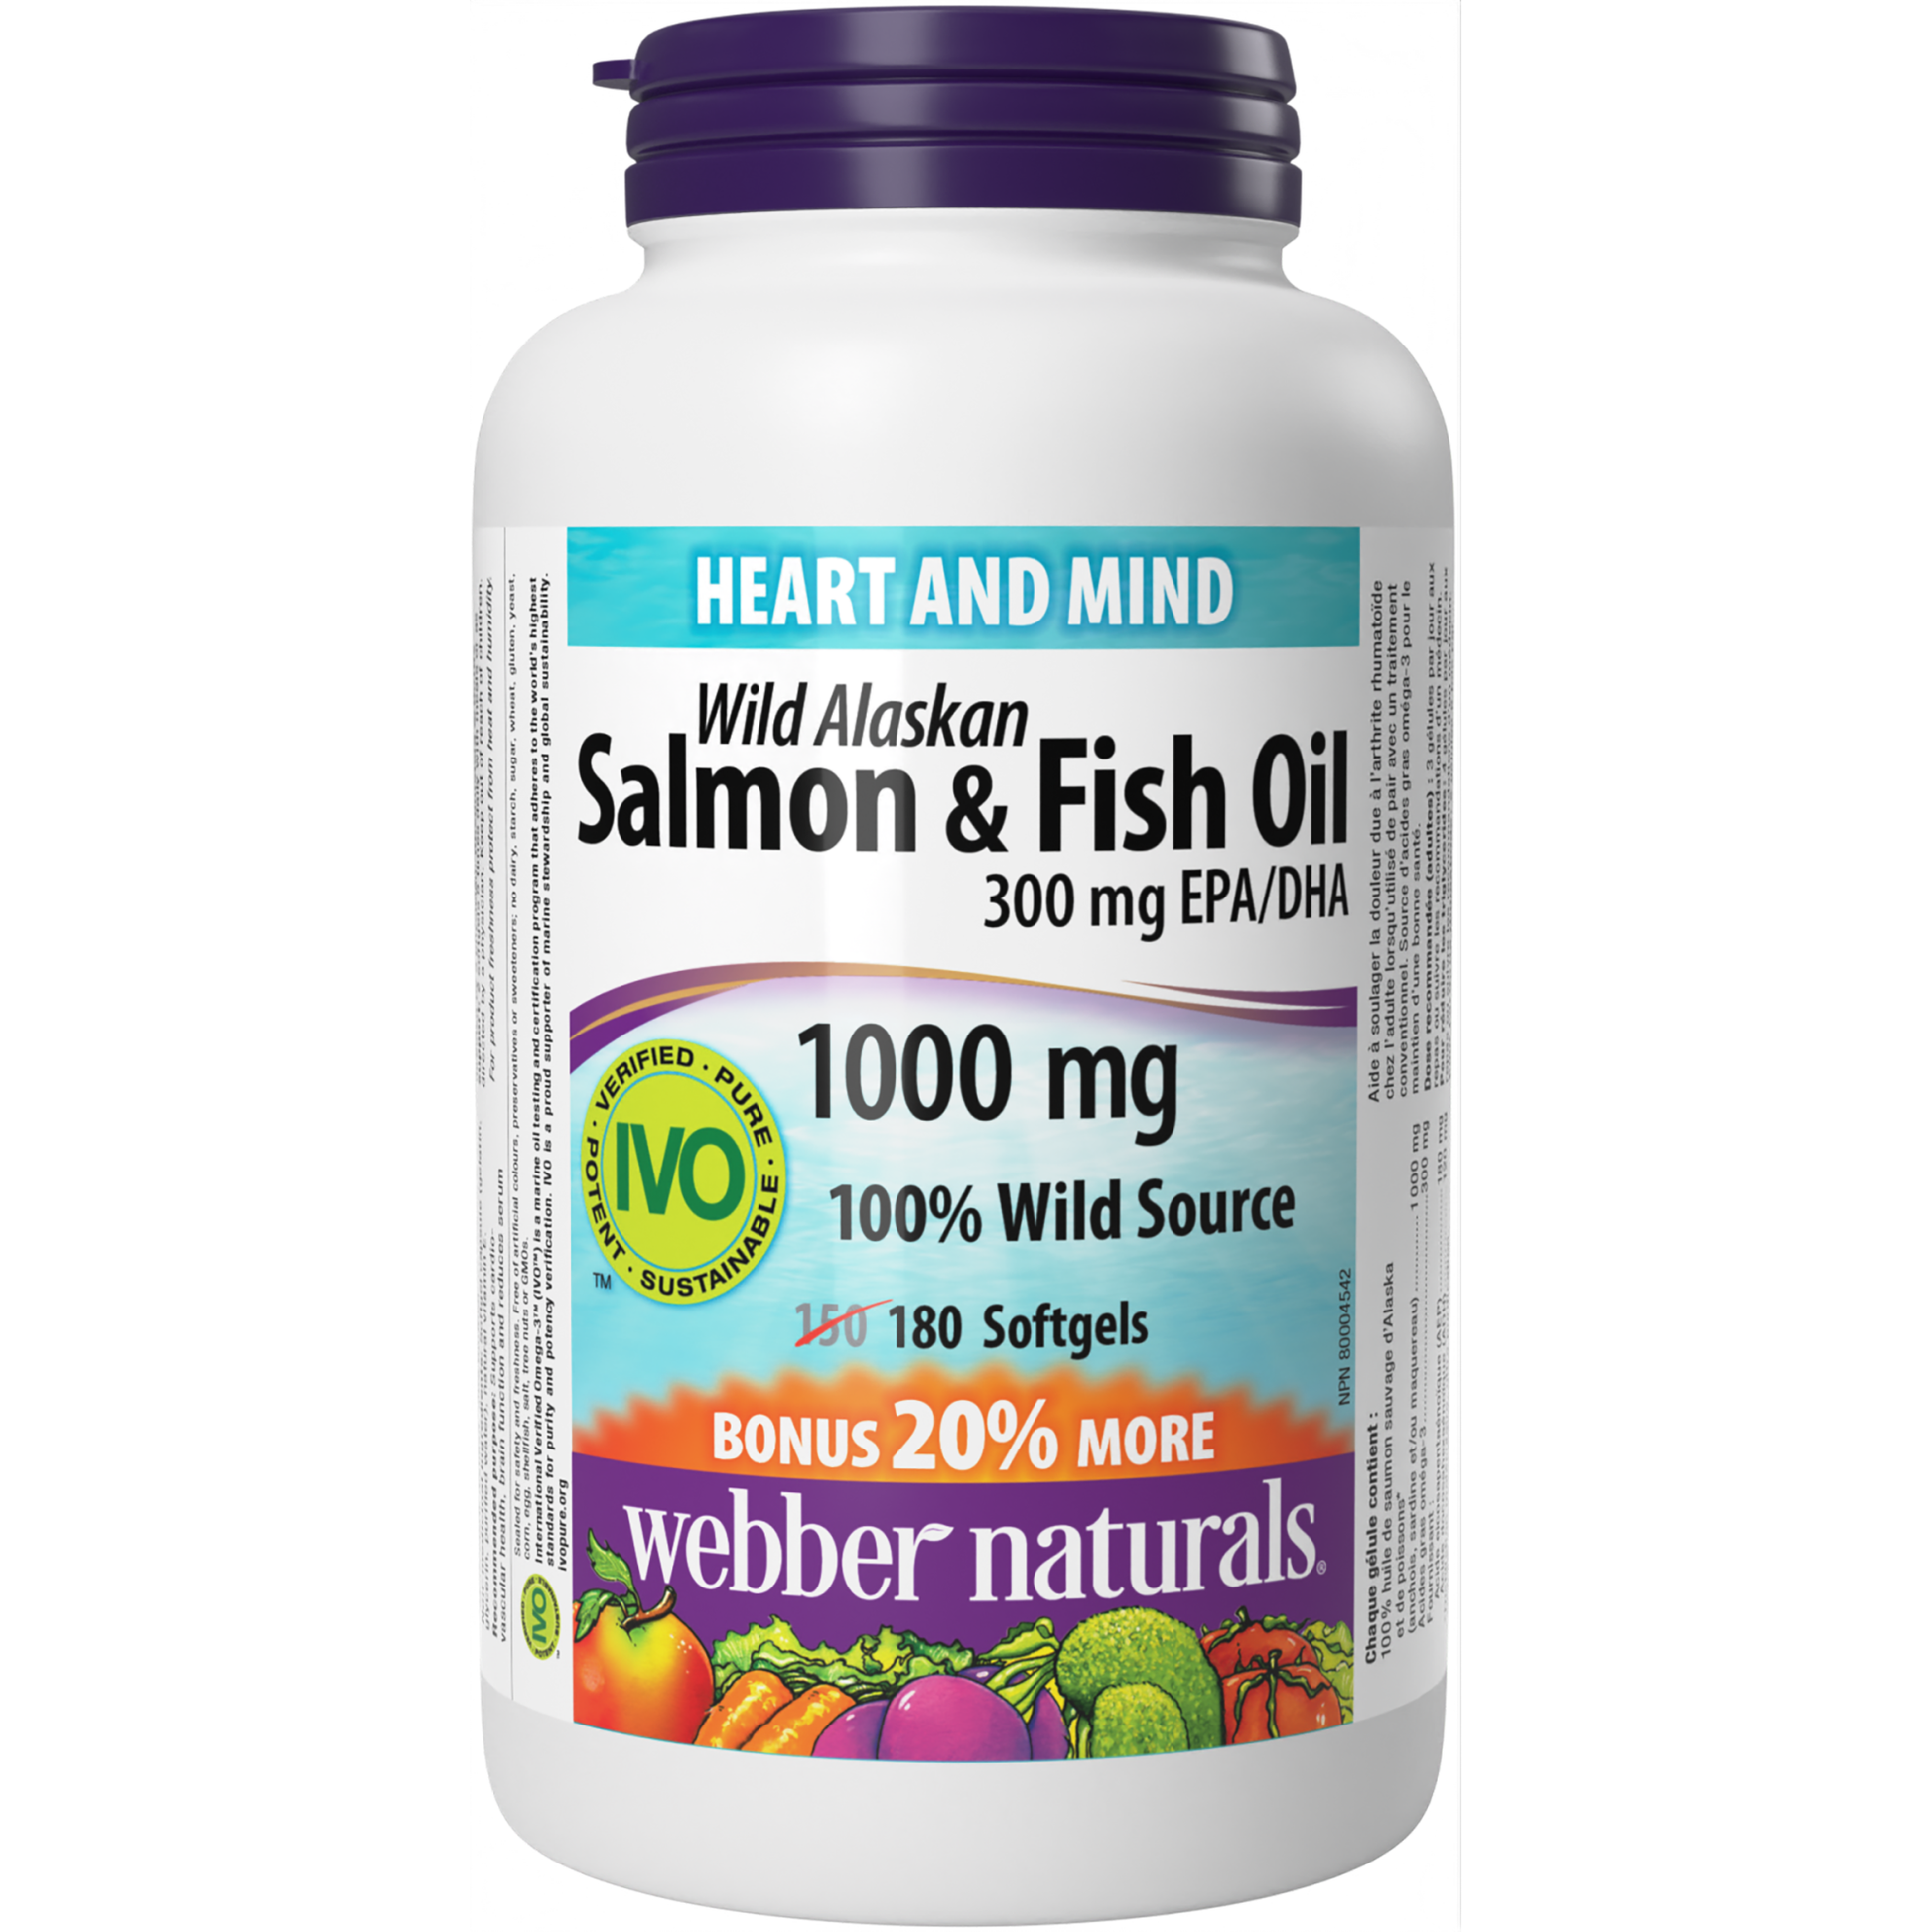 Wild Alaskan Salmon & Fish Oil 300 mg EPA/DHA 1000 mg for Webber Naturals|v|hi-res|WN3878